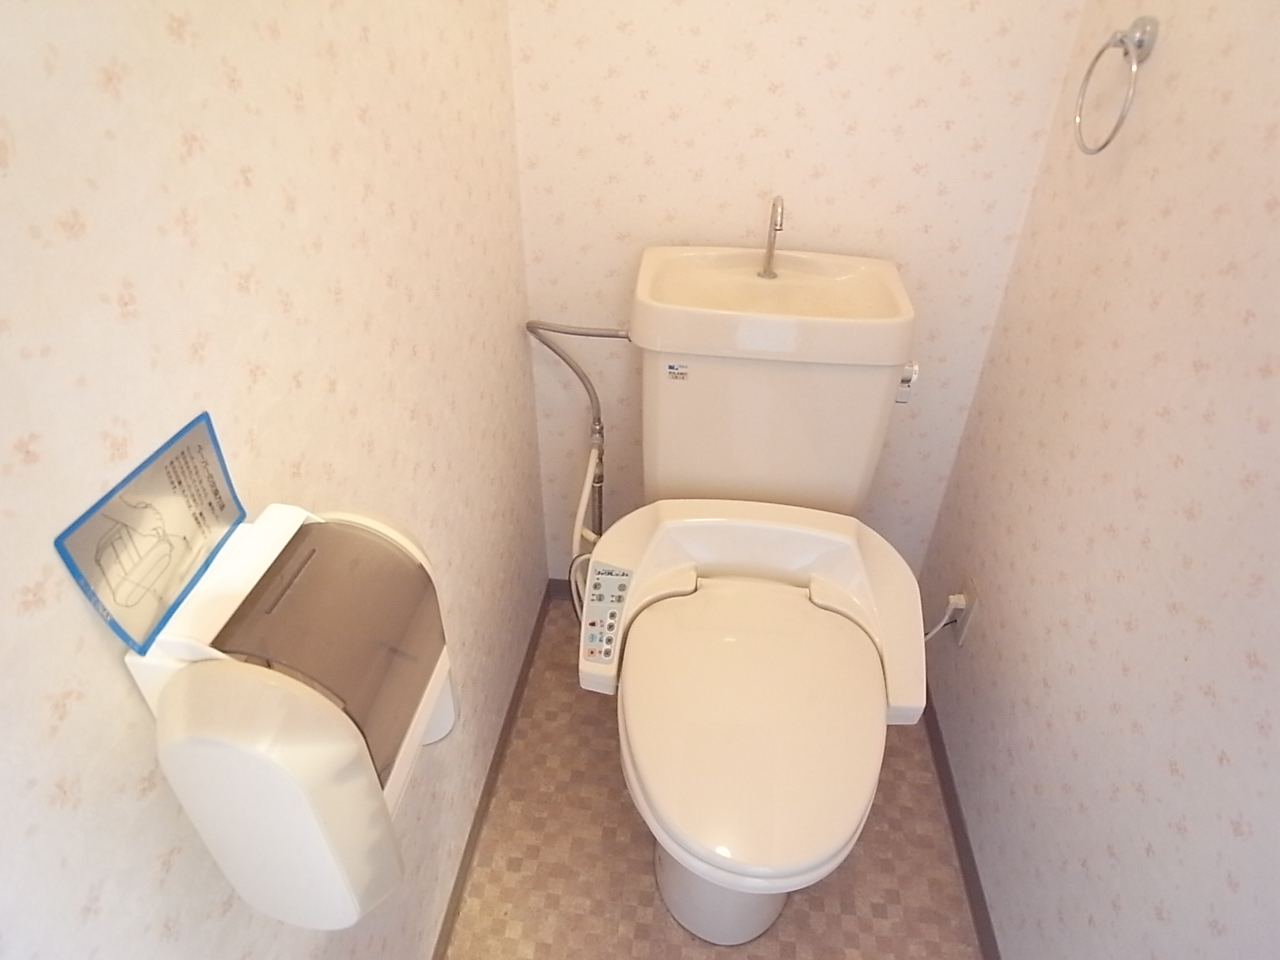 Toilet. During equipment increasingly popular ↑ bidet equipped